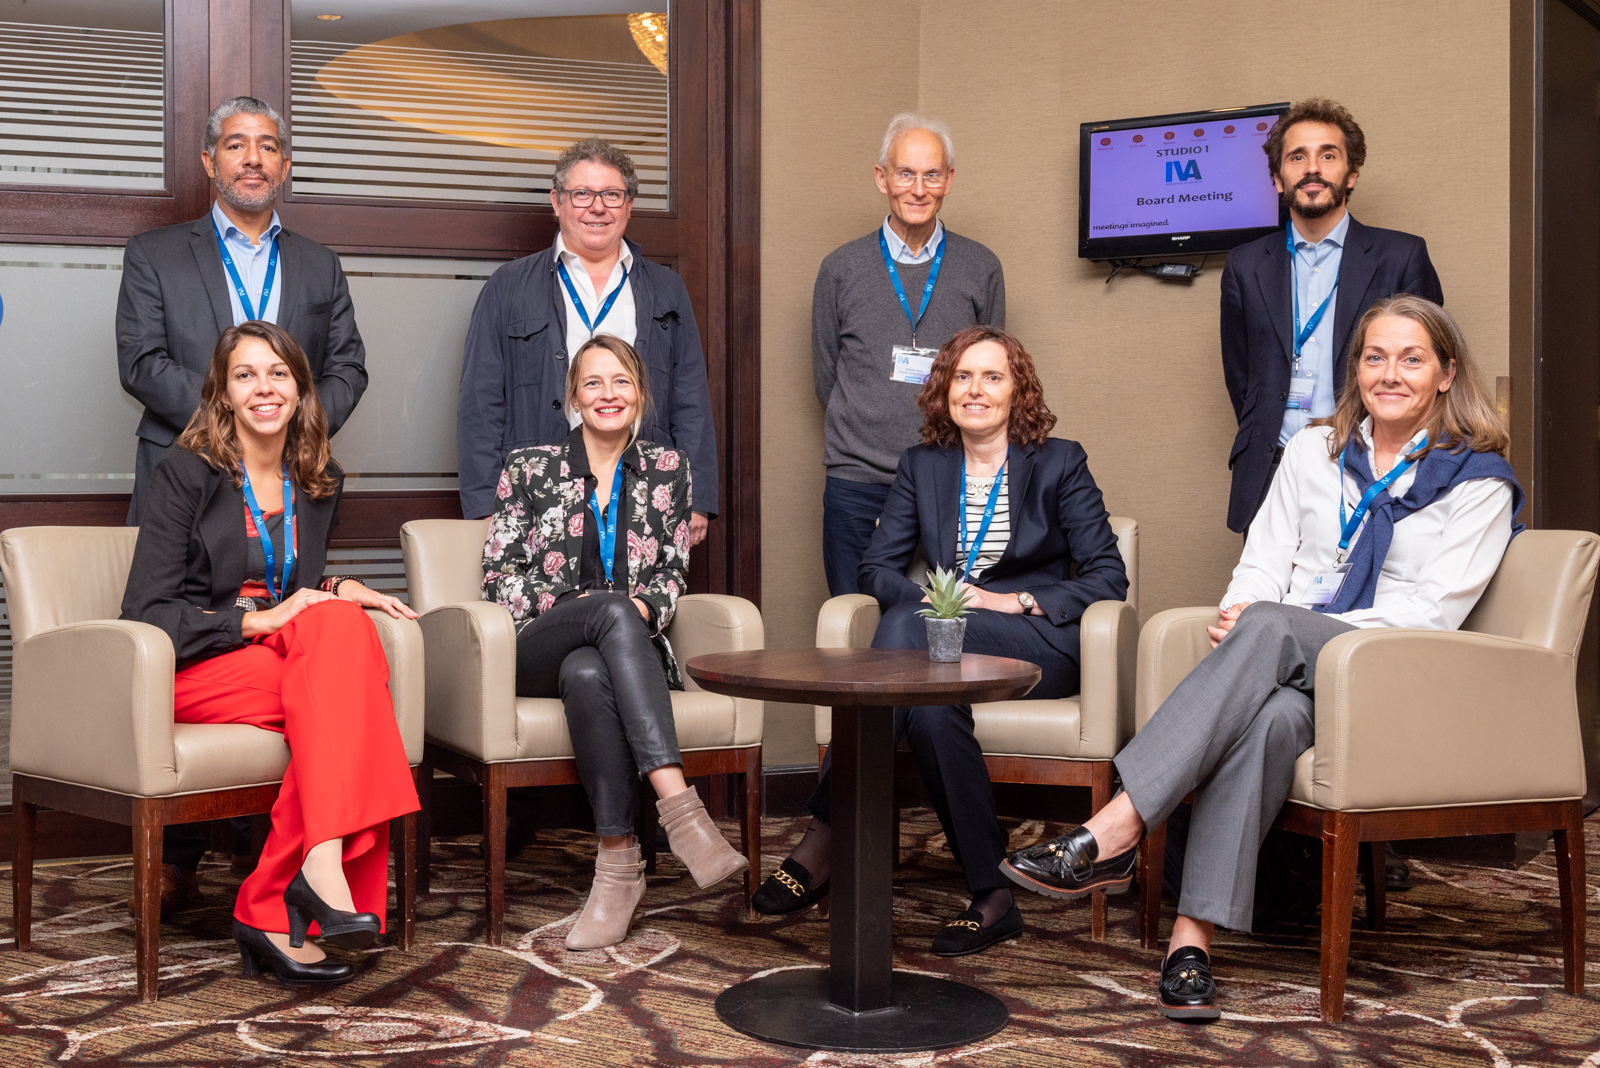 IVA Edinburgh board meeting 2022